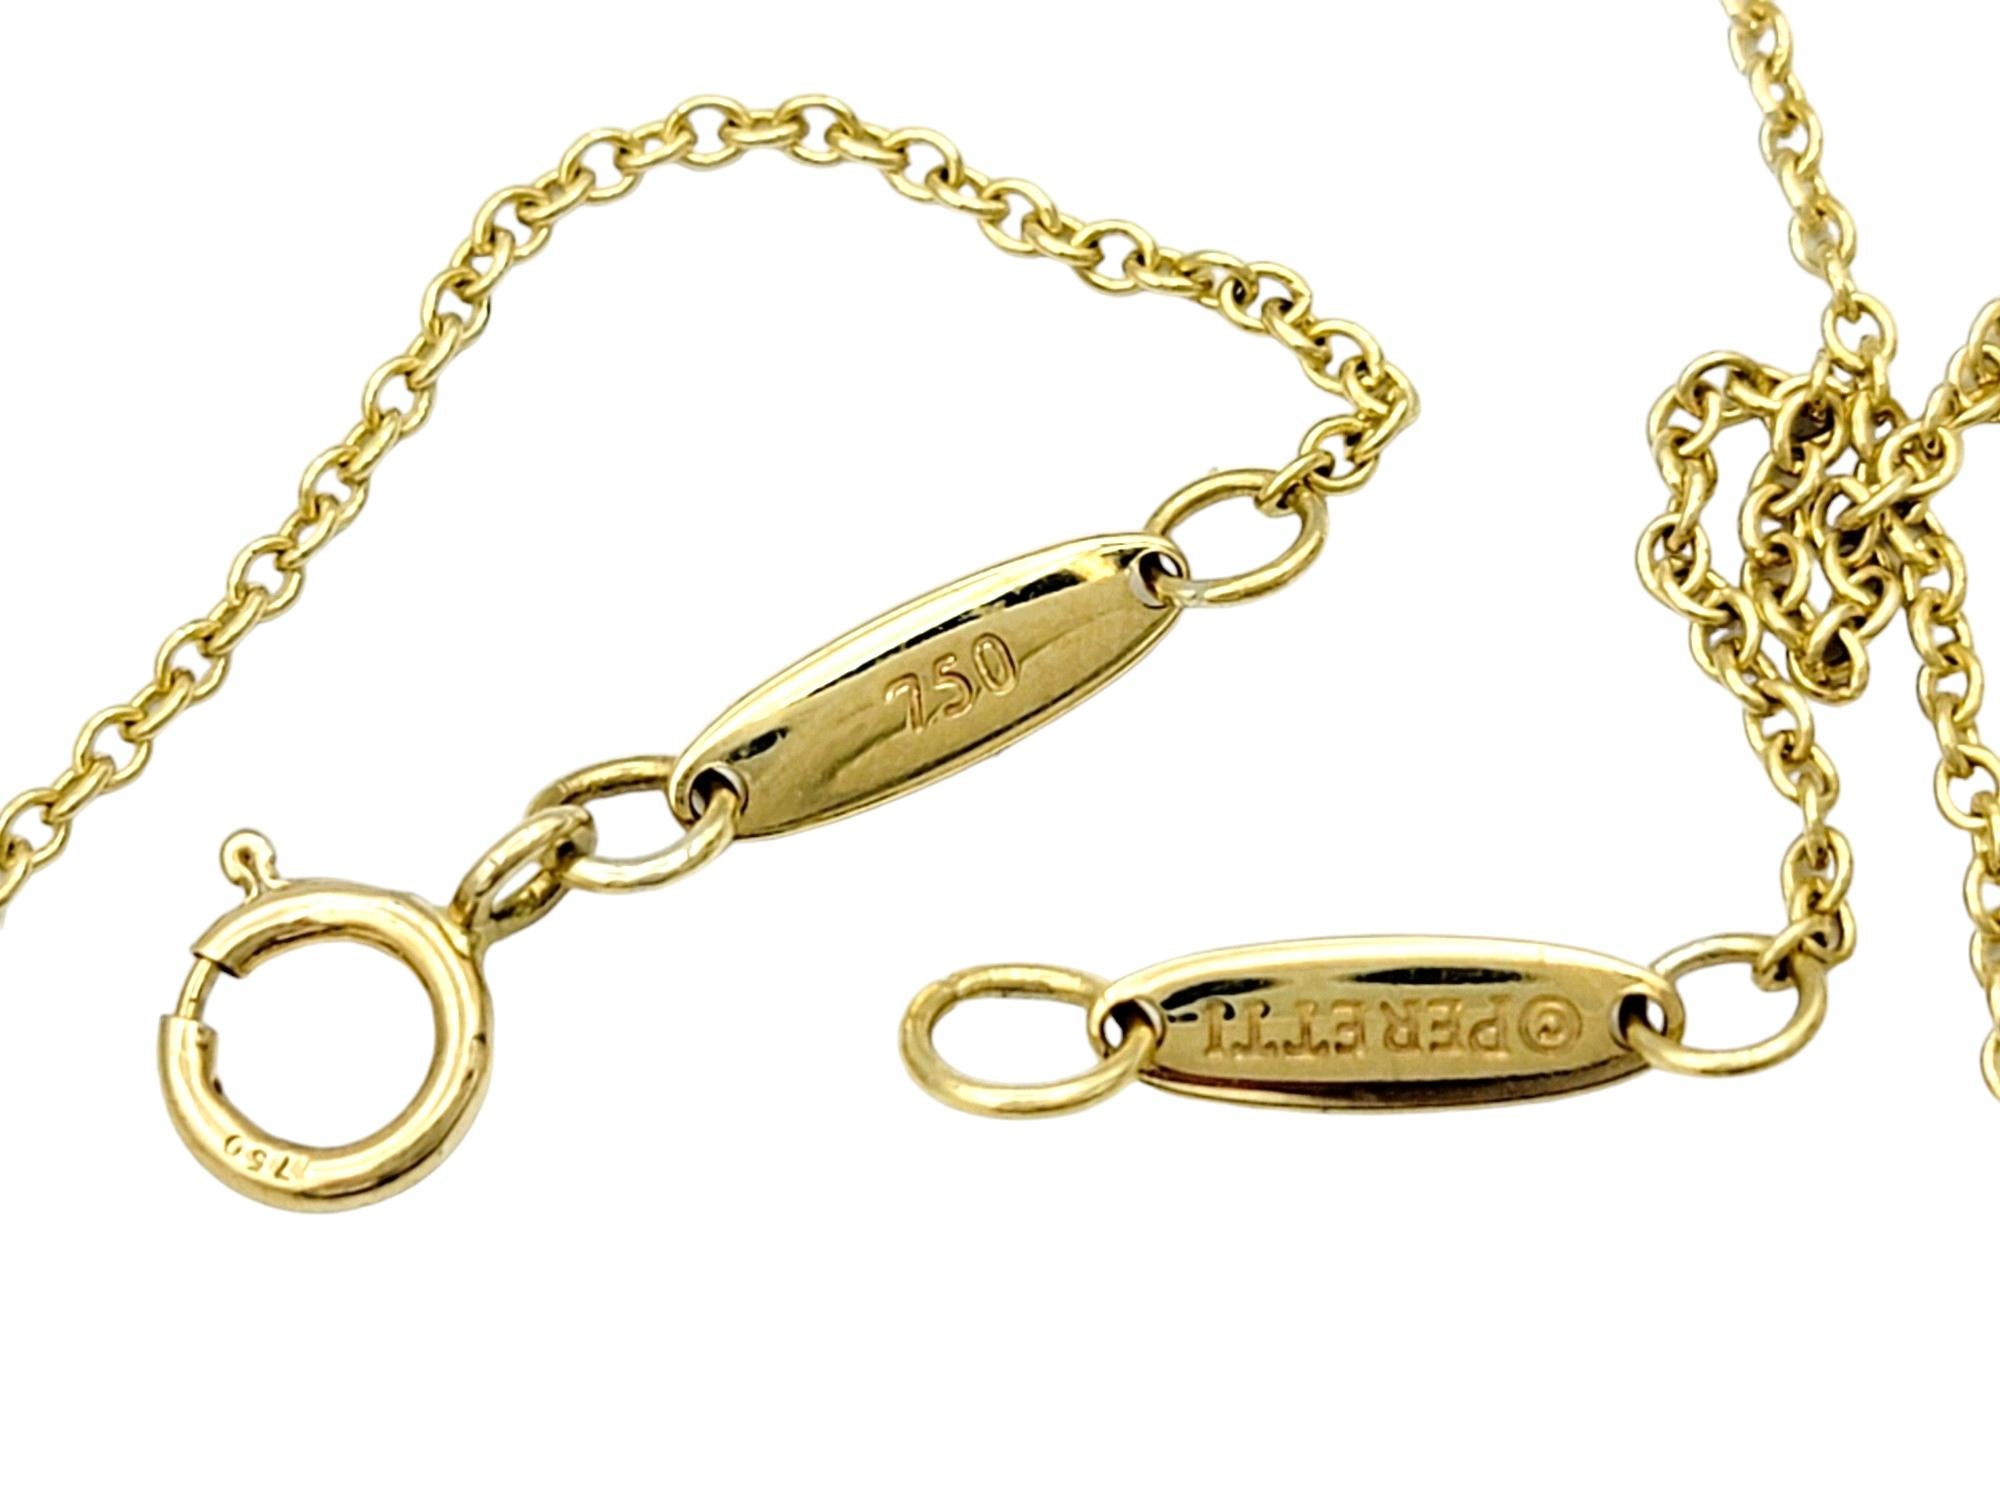 Tiffany & Co. Elsa Peretti Open Heart Pendant Necklace in 18 Karat Yellow Gold For Sale 1